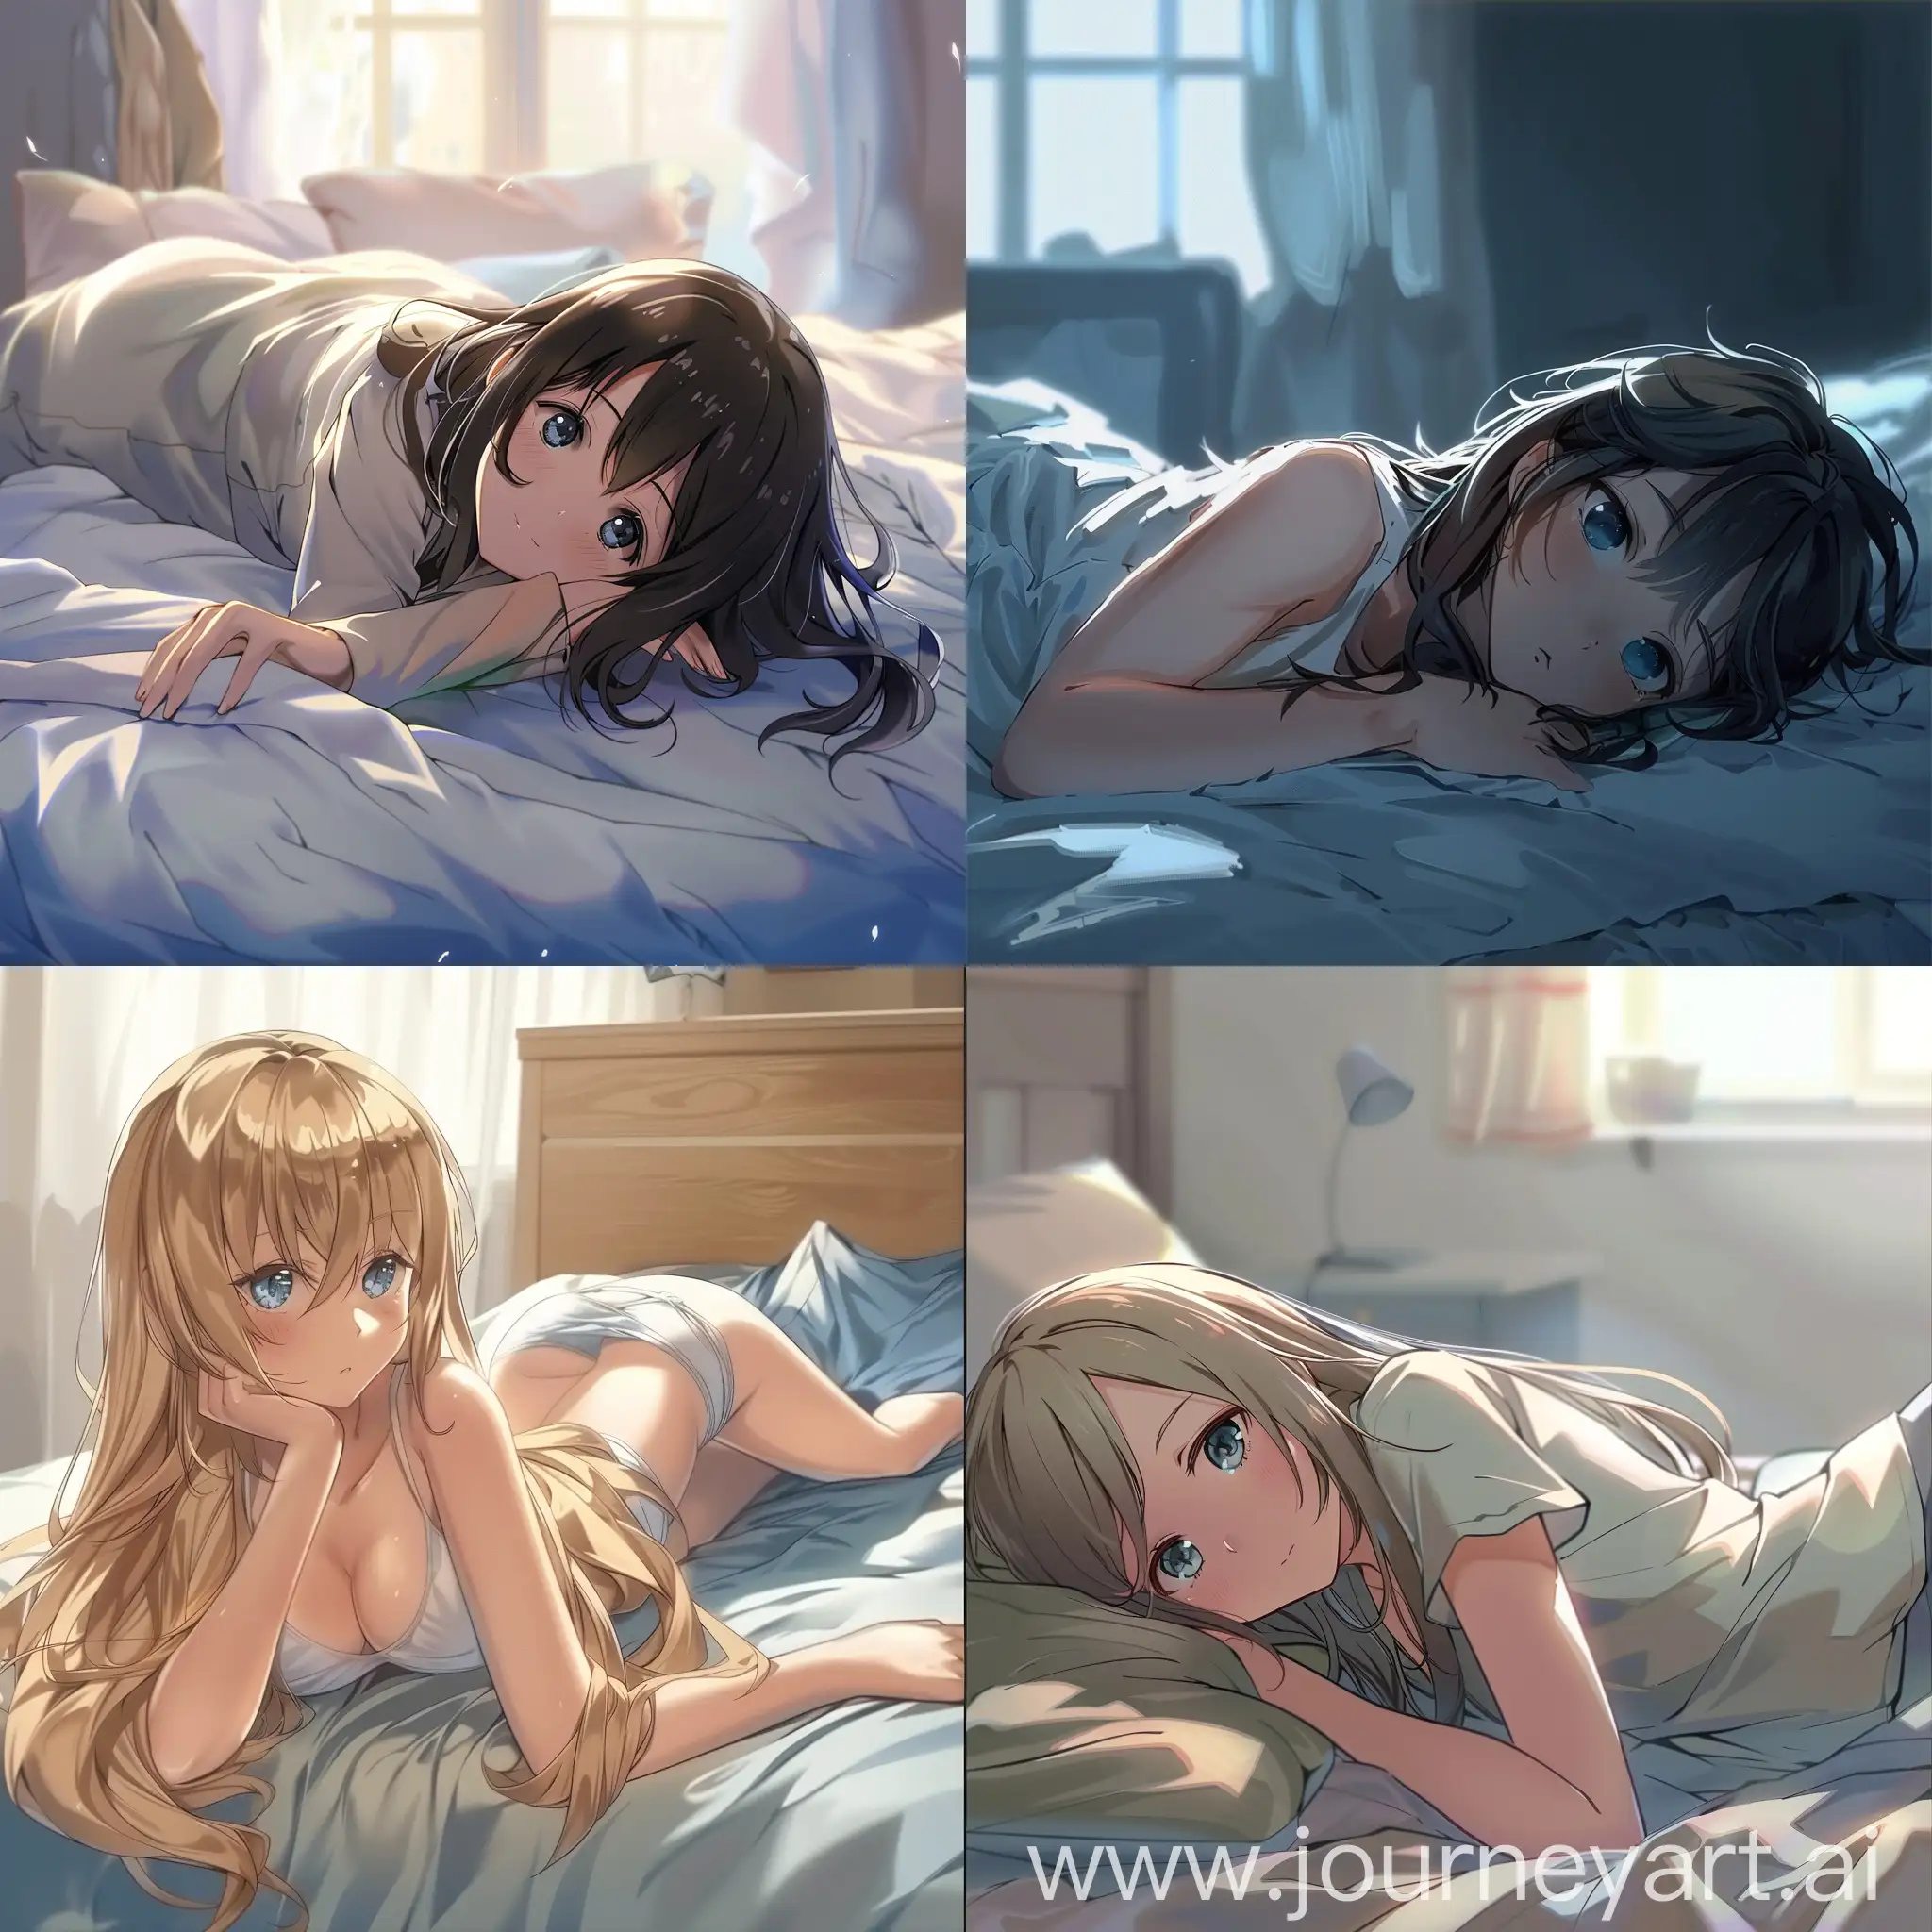 Anime-Girl-Relaxing-on-Bed-in-Serene-Atmosphere